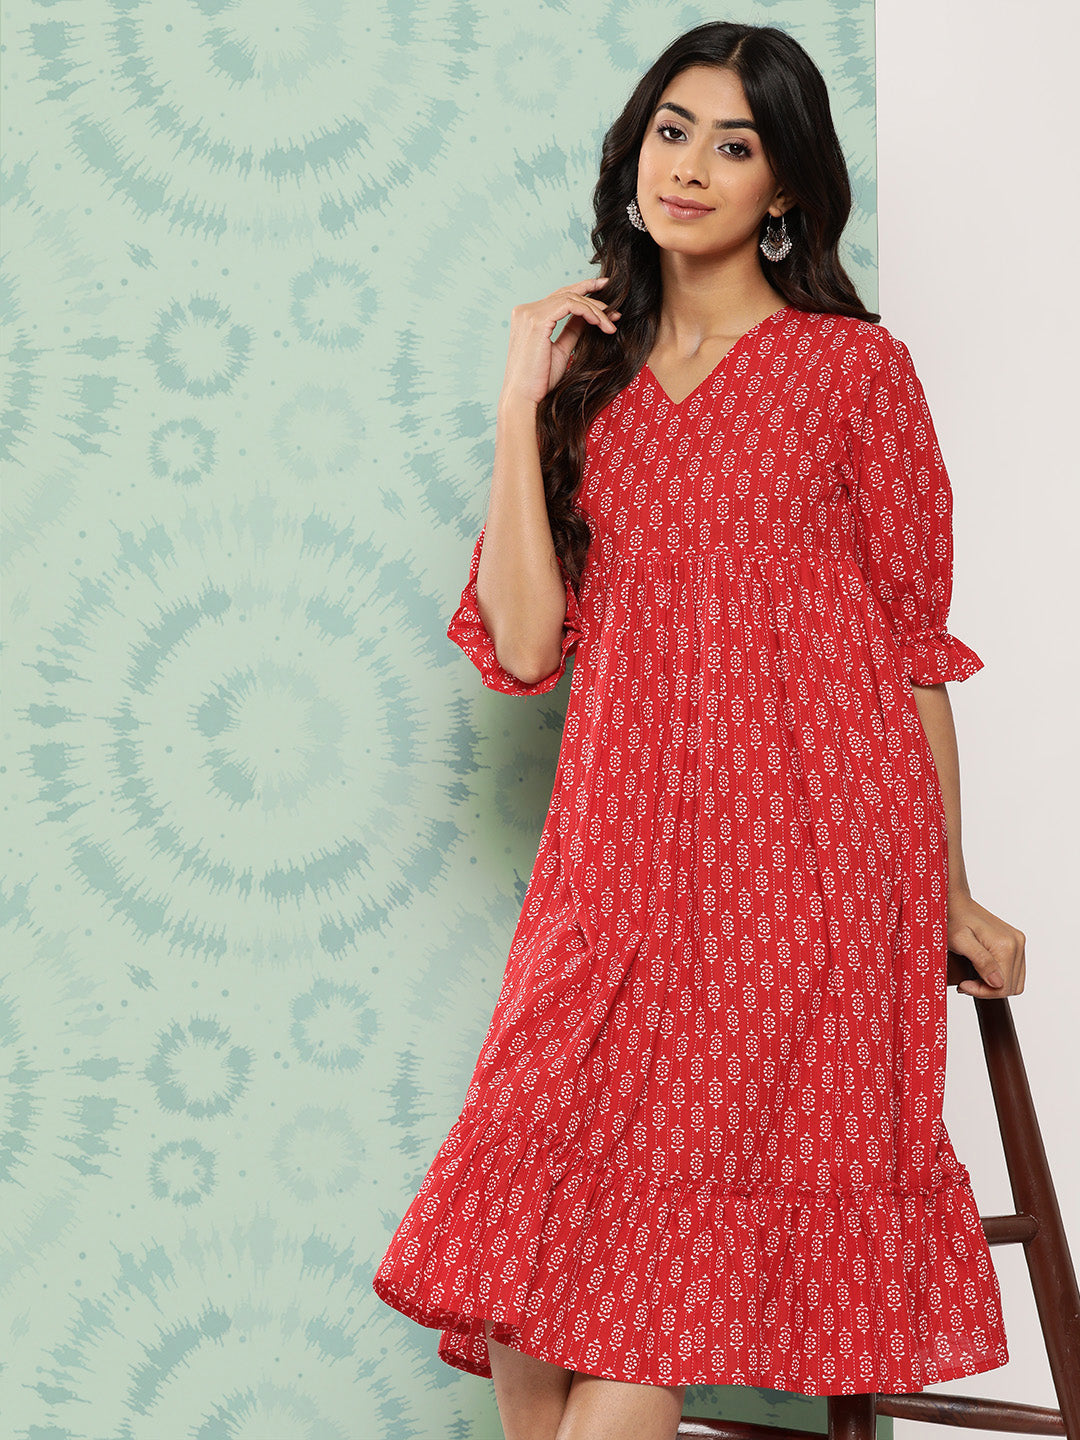 Women's Ethnic Motifs Printed Red Cotton Dress - Janasya